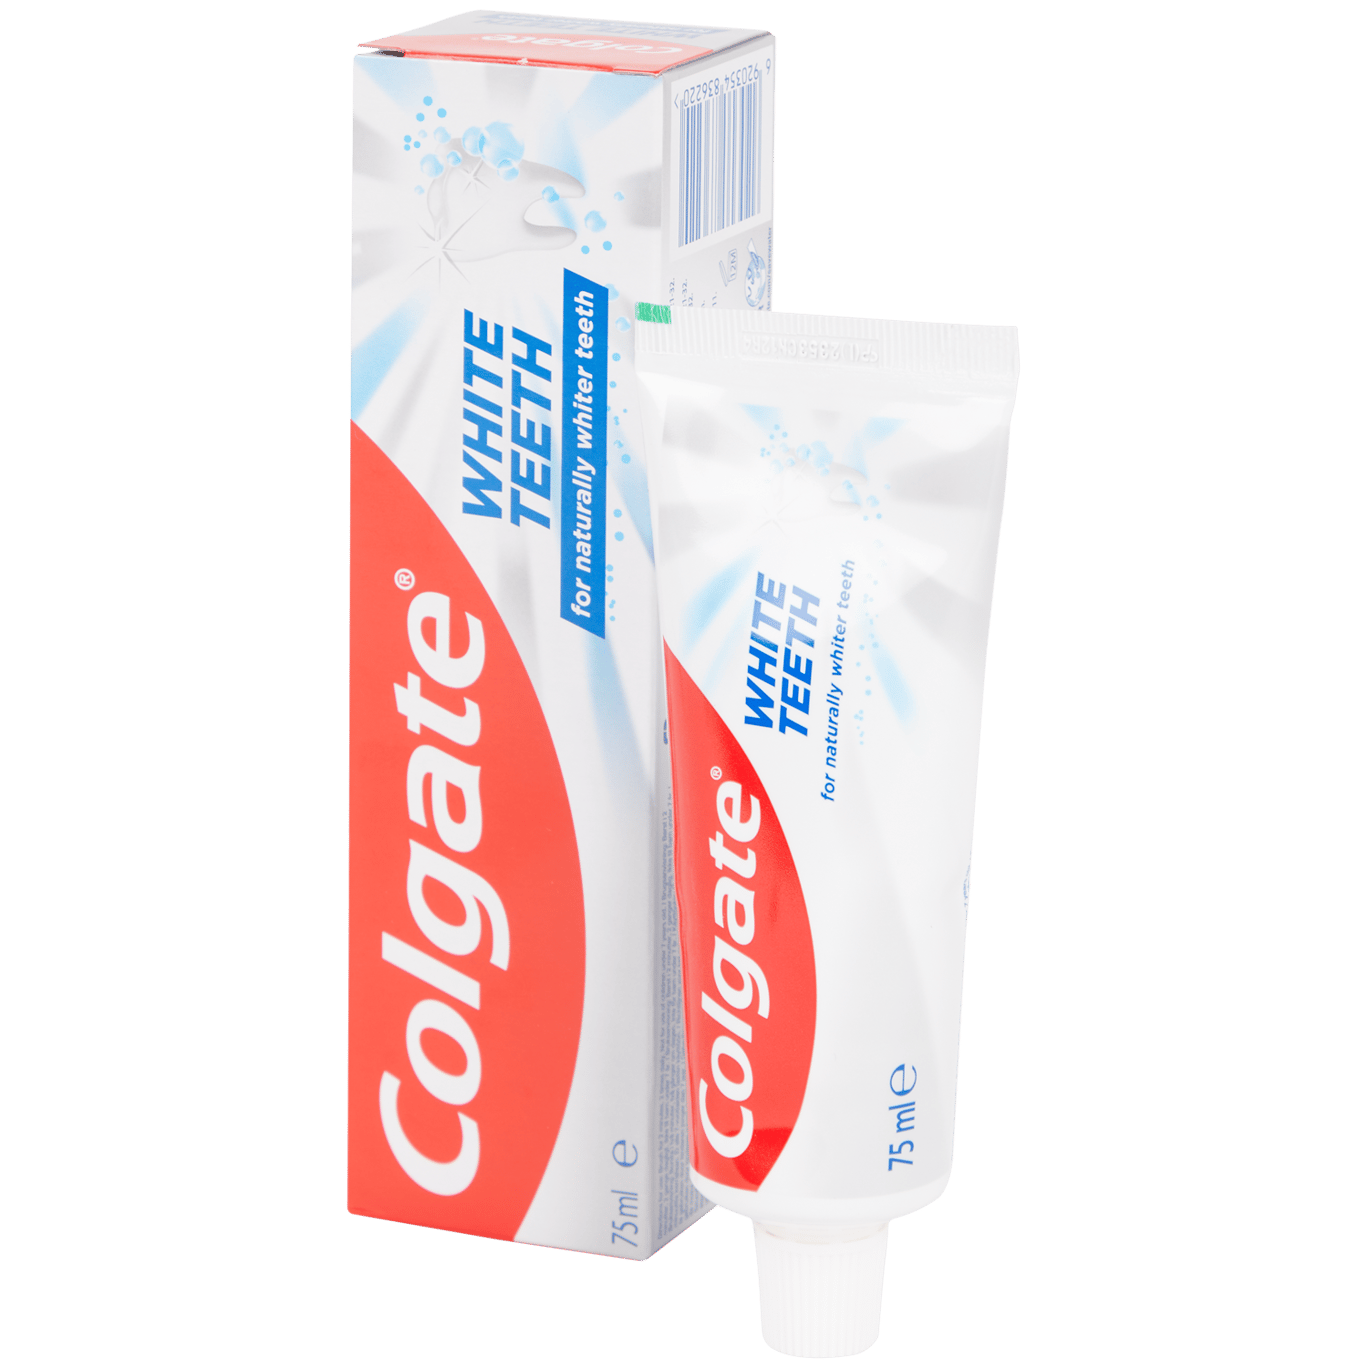 Pasta de dentes Colgate White Teeth